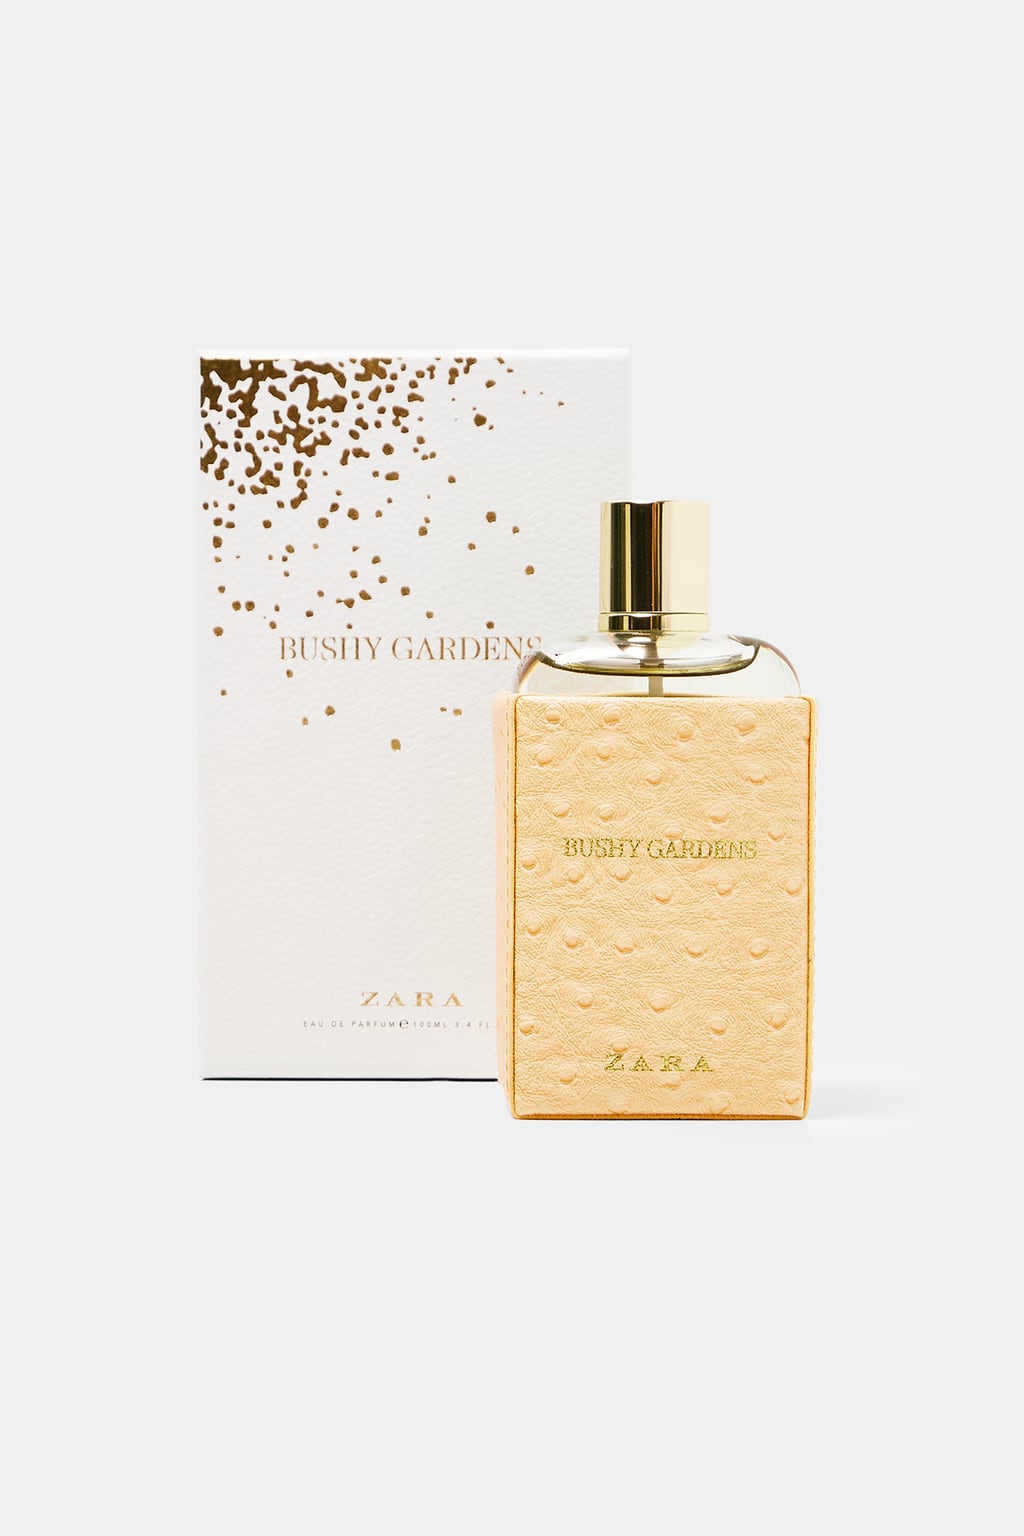 Bushy Gardens Zara perfume - a new 